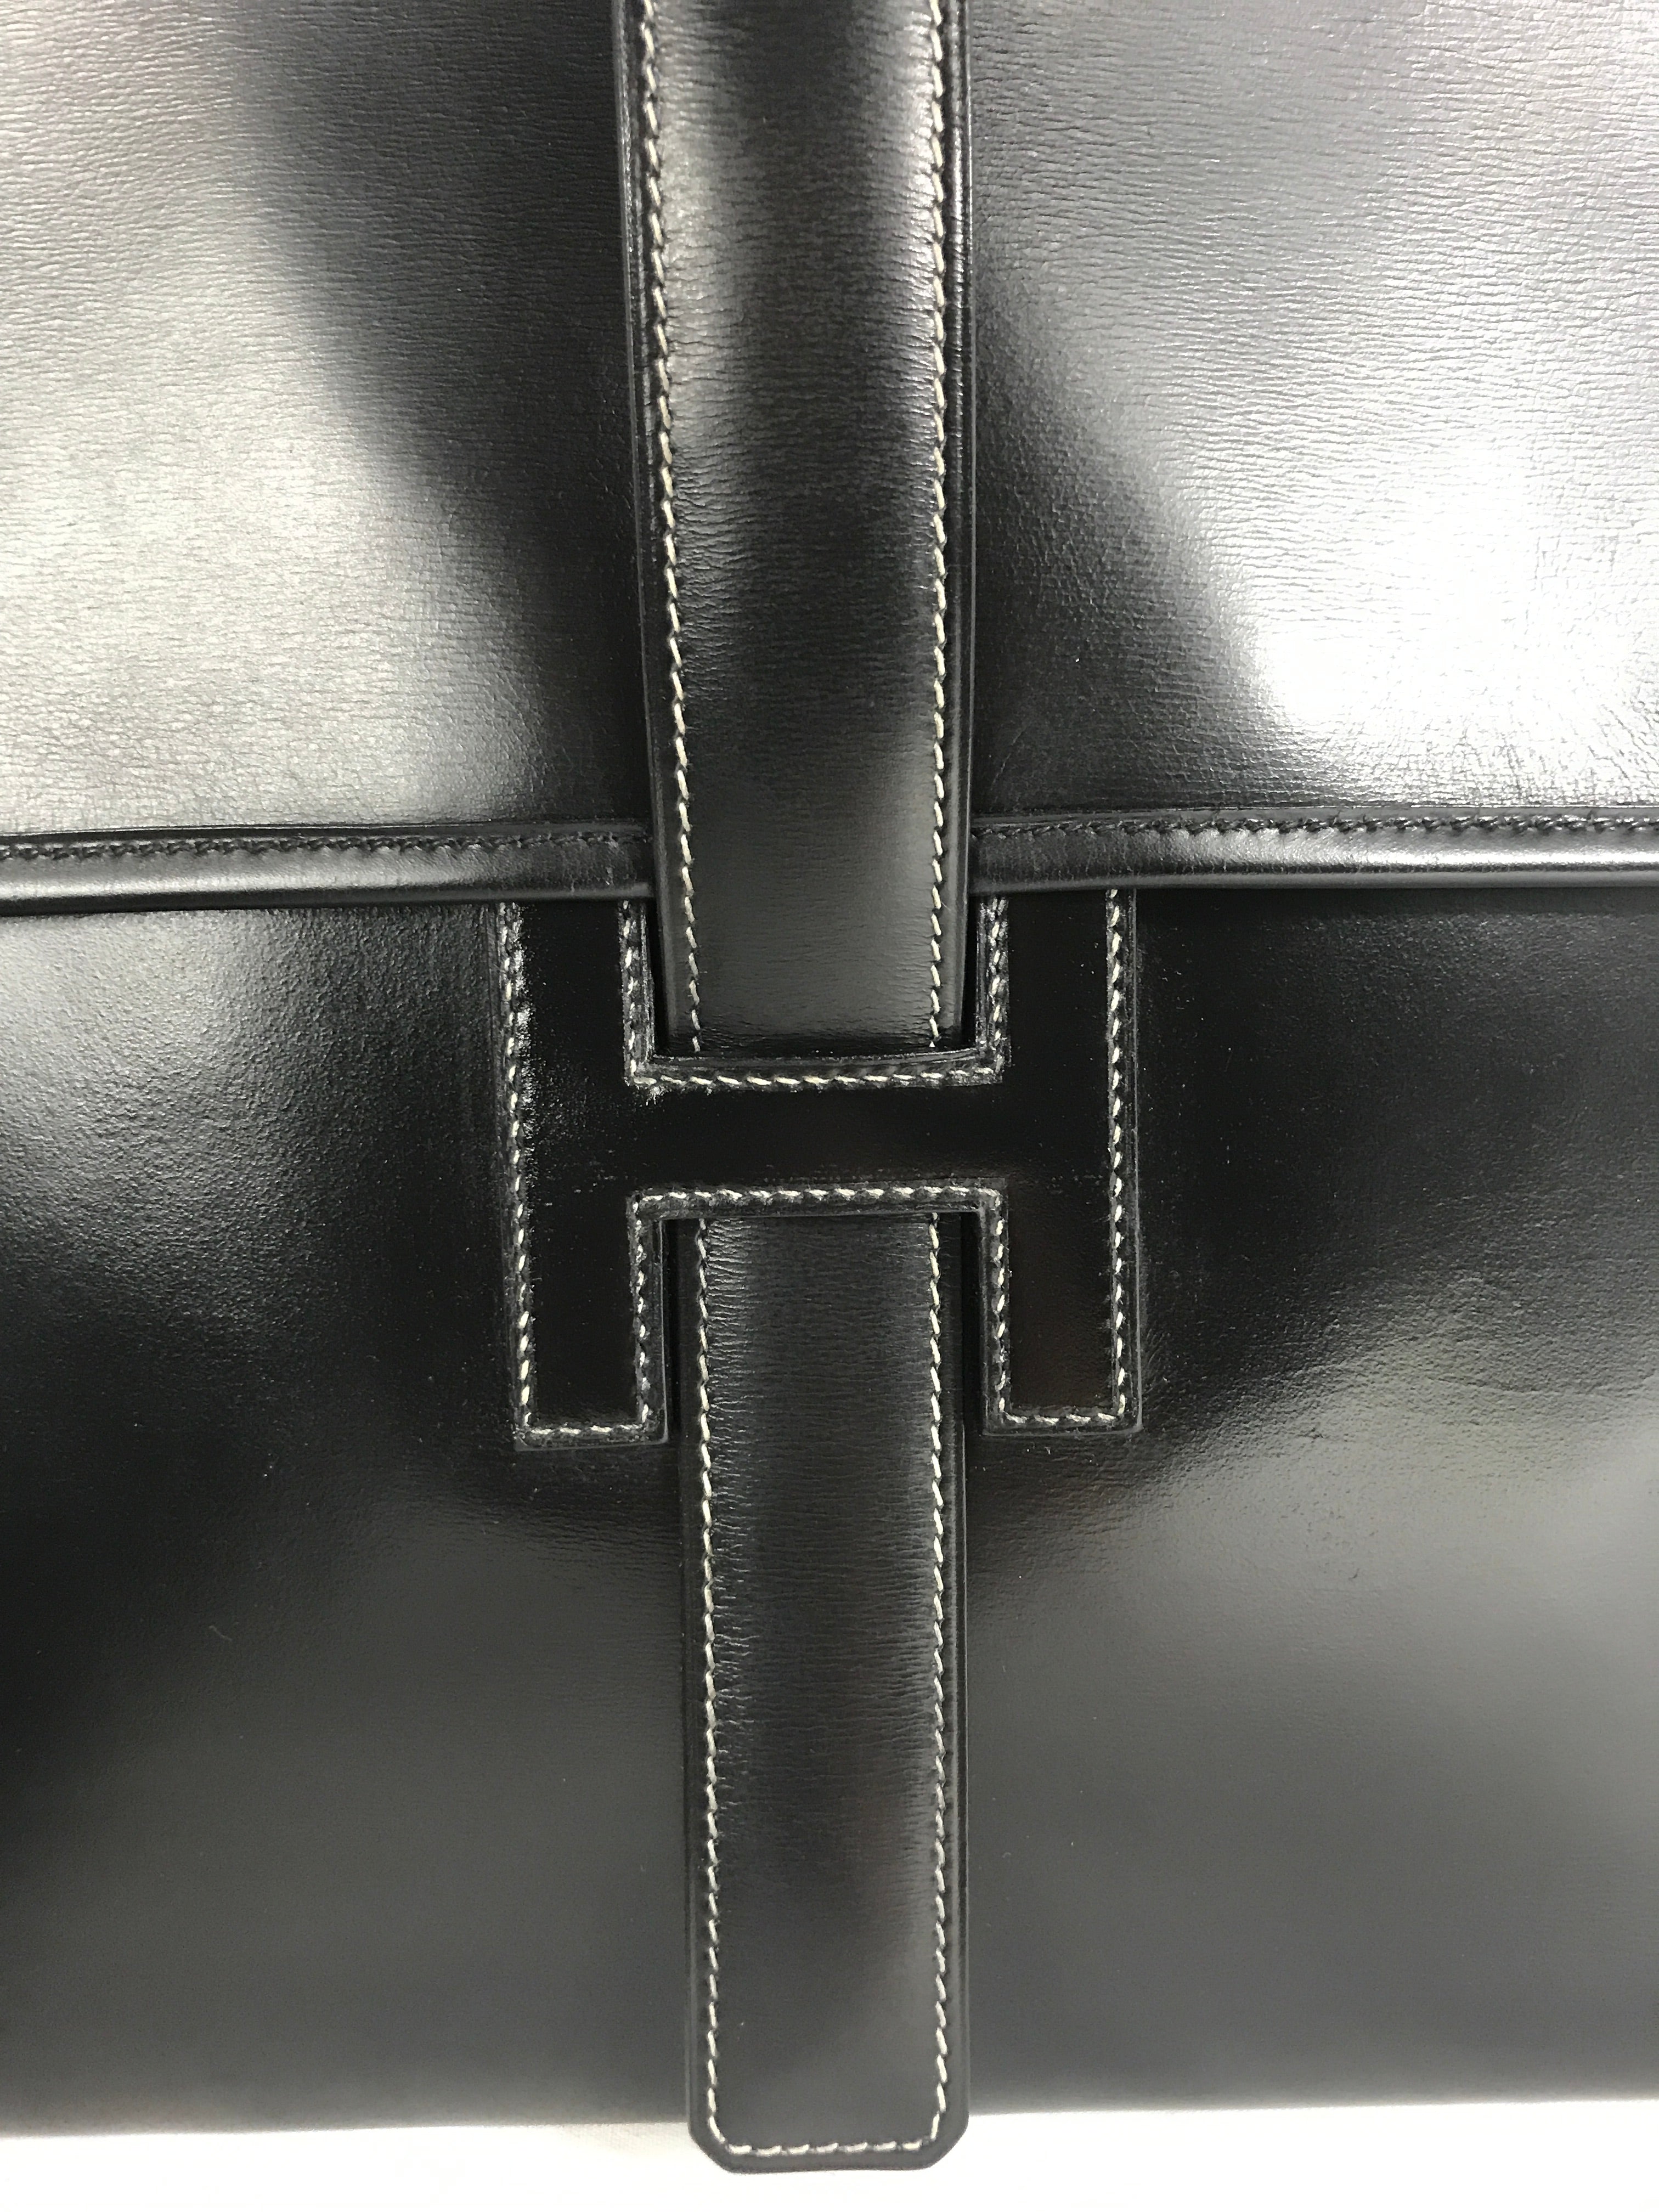 Black Box Calf Leather Portfolio Vintage Jige 34